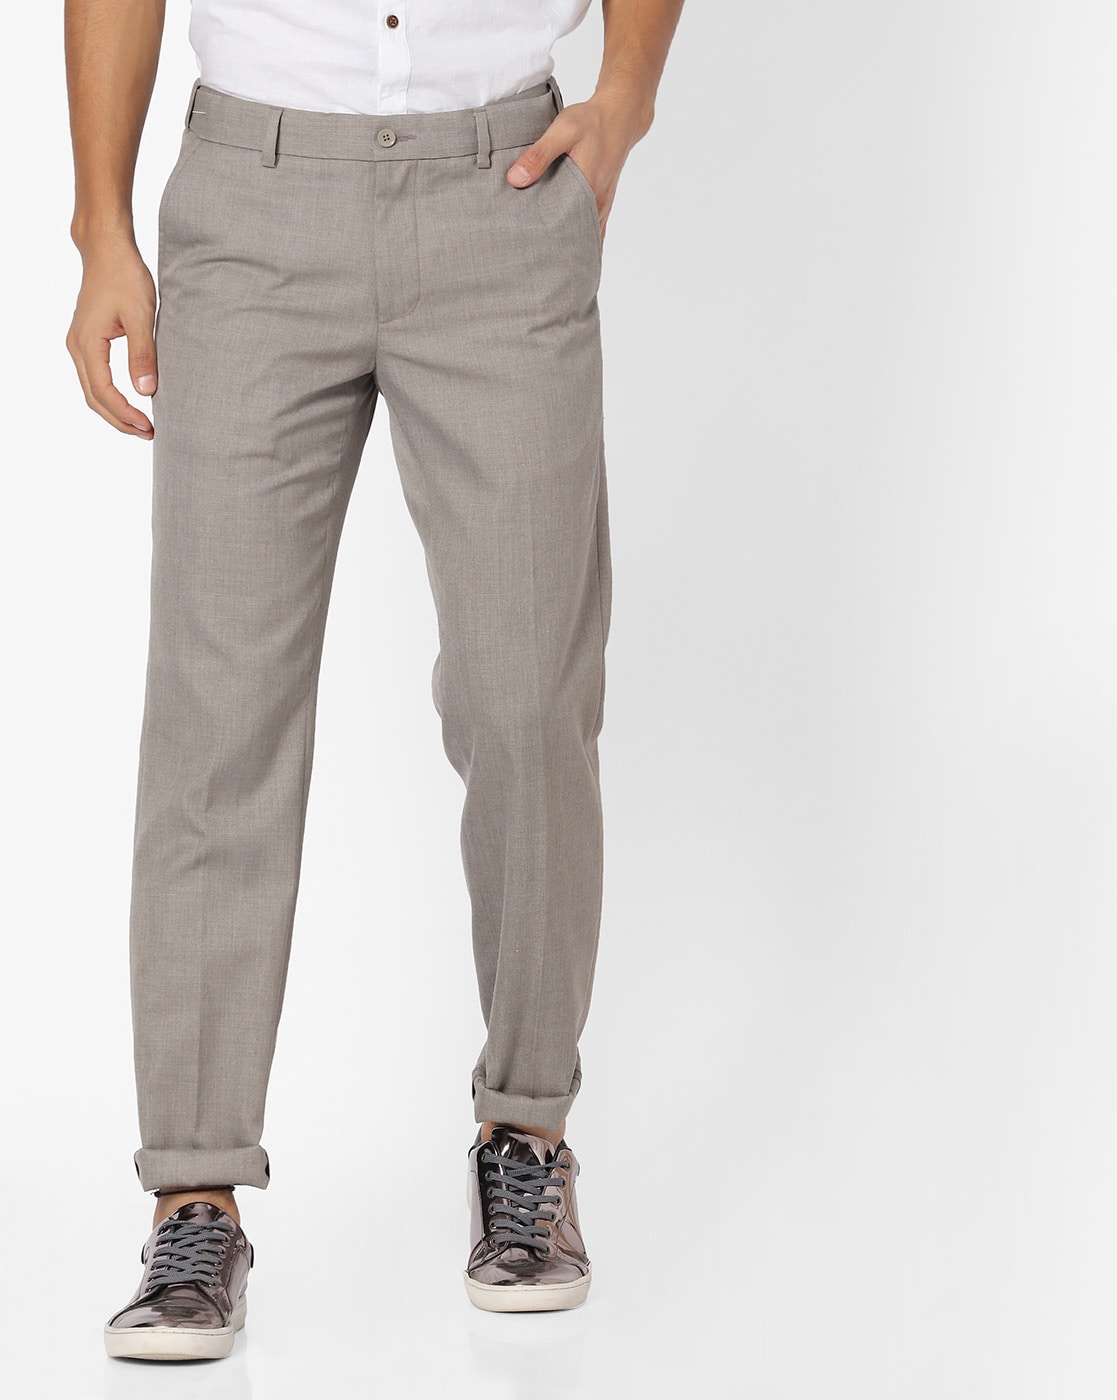 Buy Light Grey Trousers  Pants for Men by NETWORK Online  Ajiocom